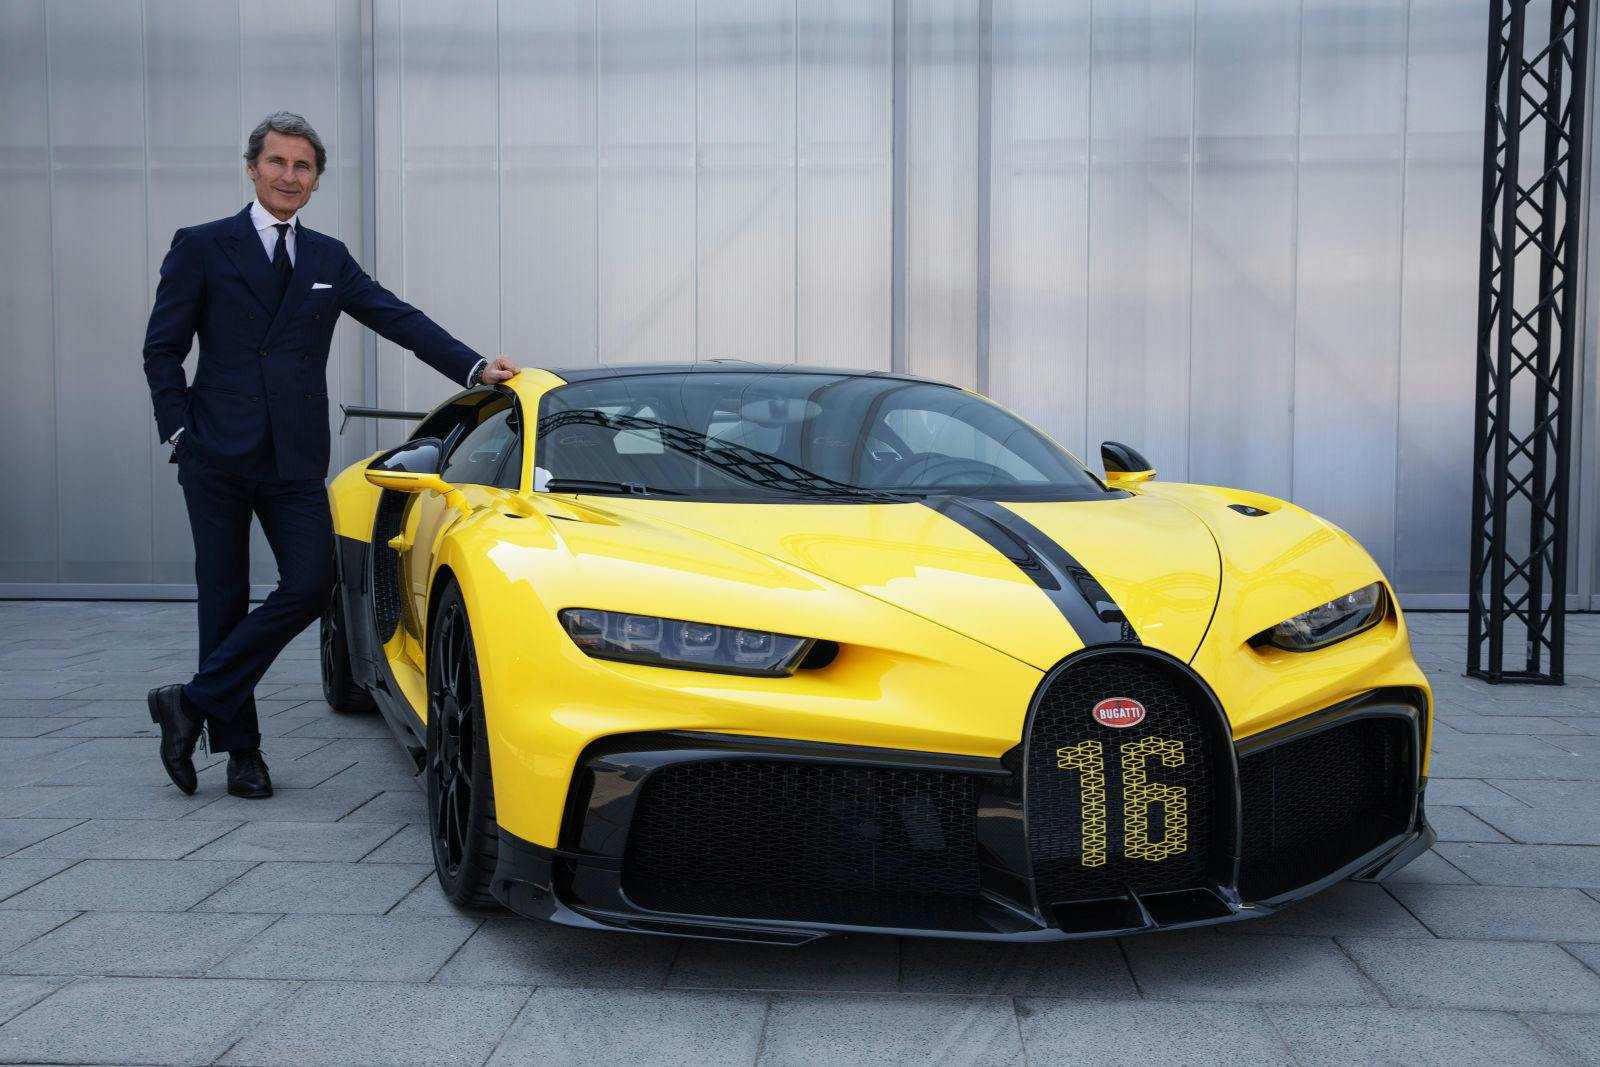 New record-breaking year for Bugatti: Stephan Winkelmann with the Bugatti Chiron Pur Sport.